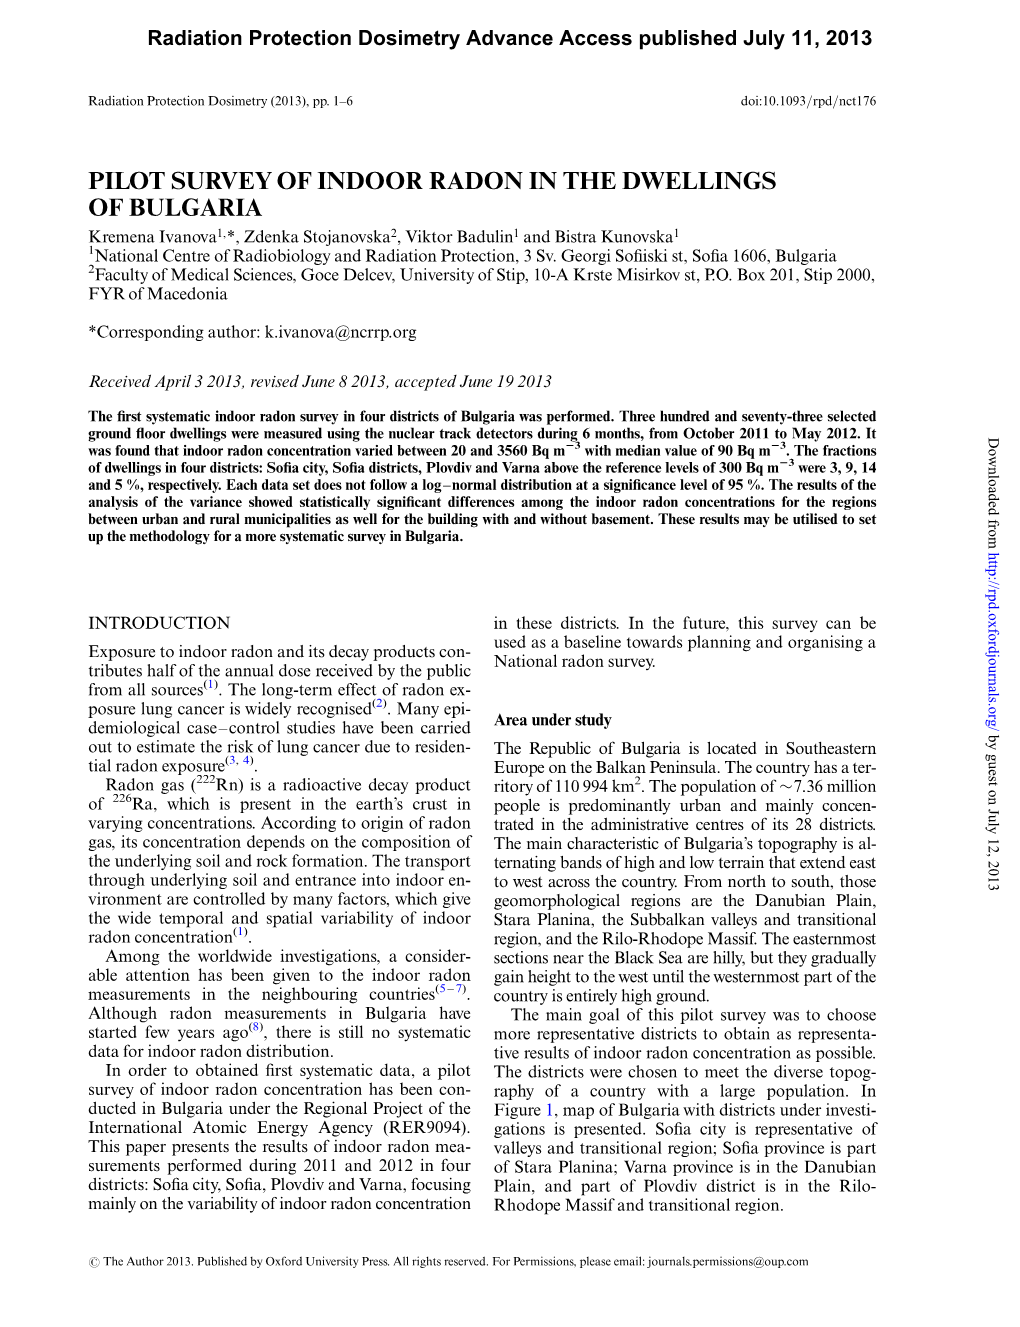 Pilot Survey of Indoor Radon in the Dwellings of Bulgaria